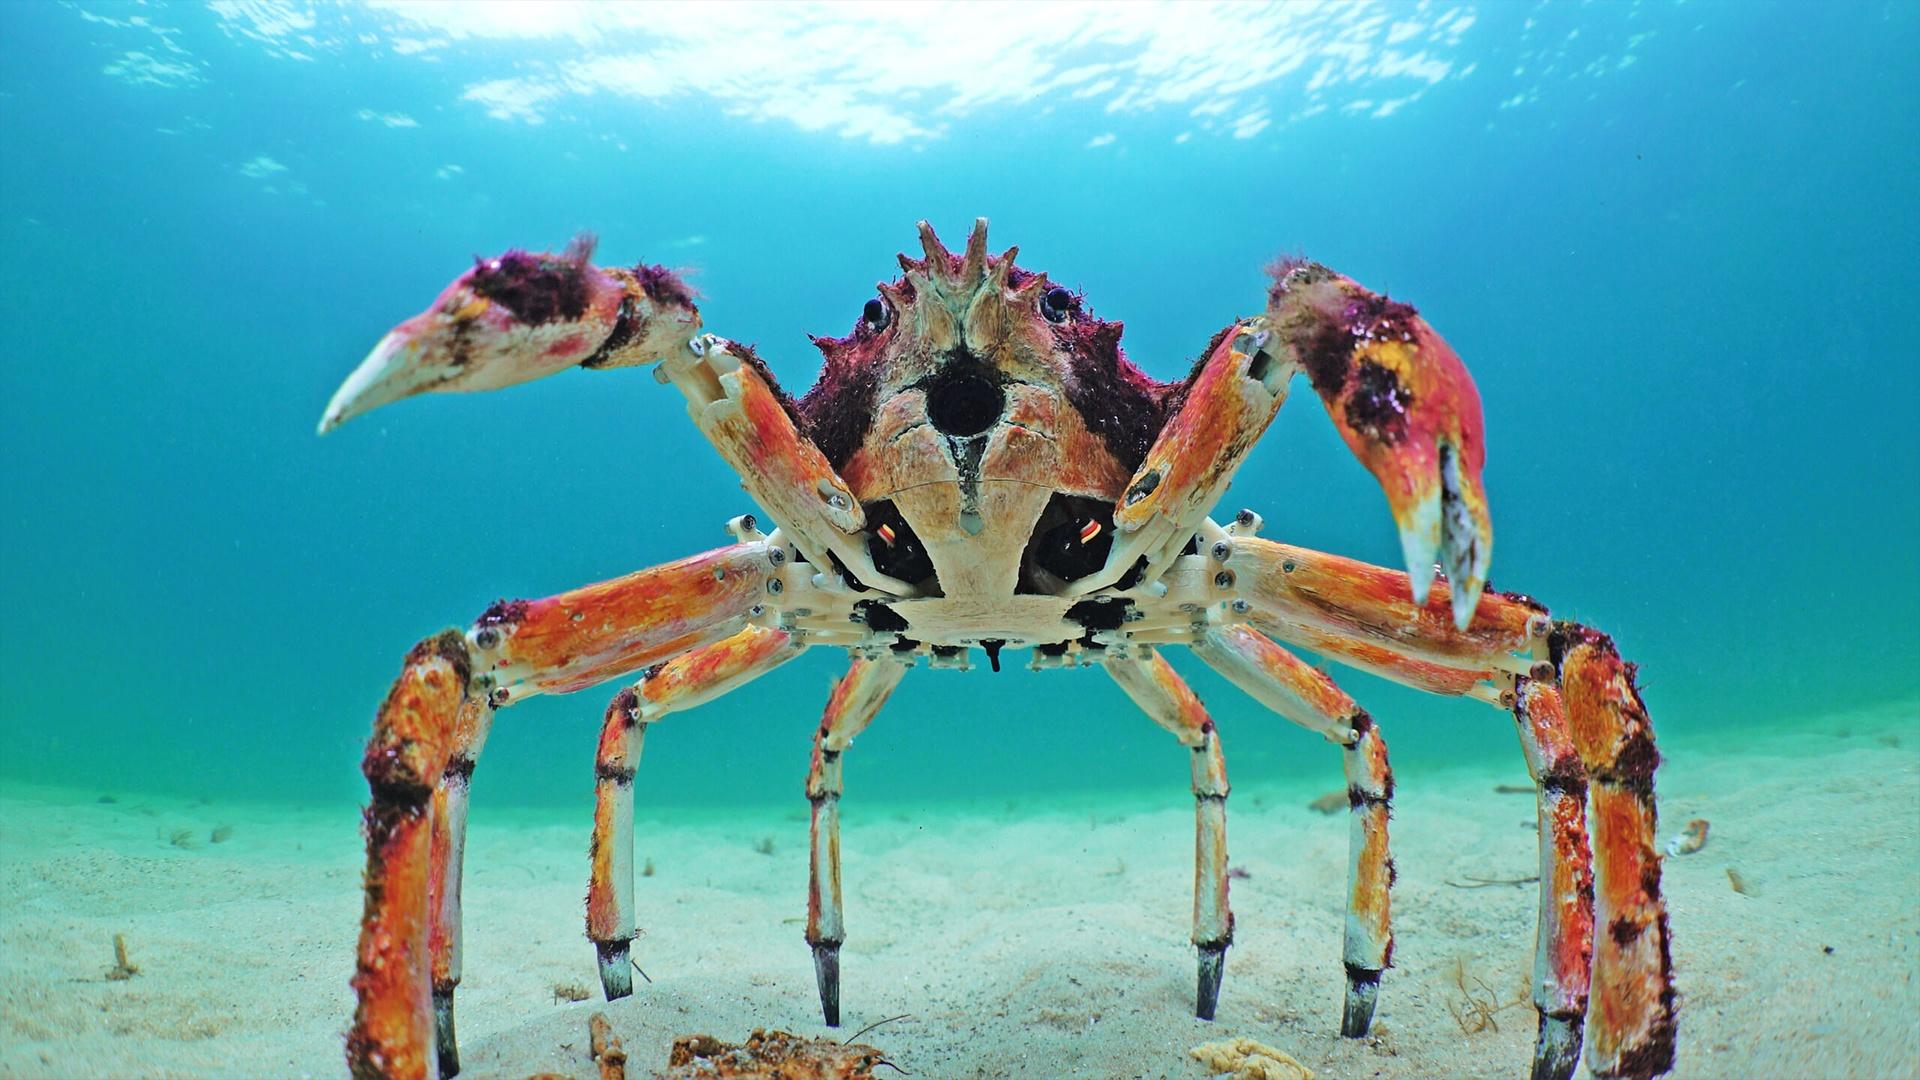 Spider crab on the ocean floor.